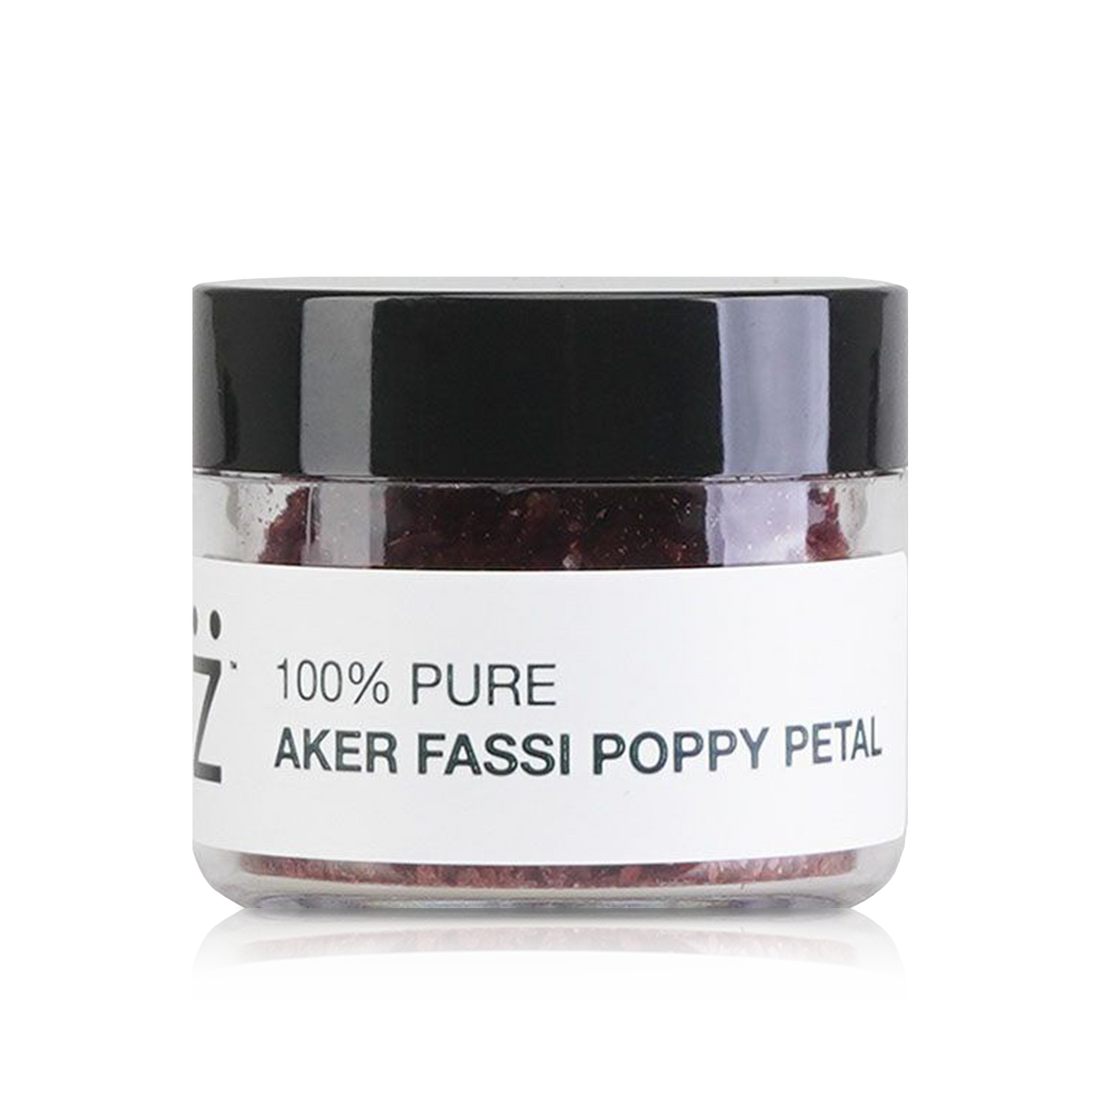 100% Pure Aker Fassi Poppy Petal